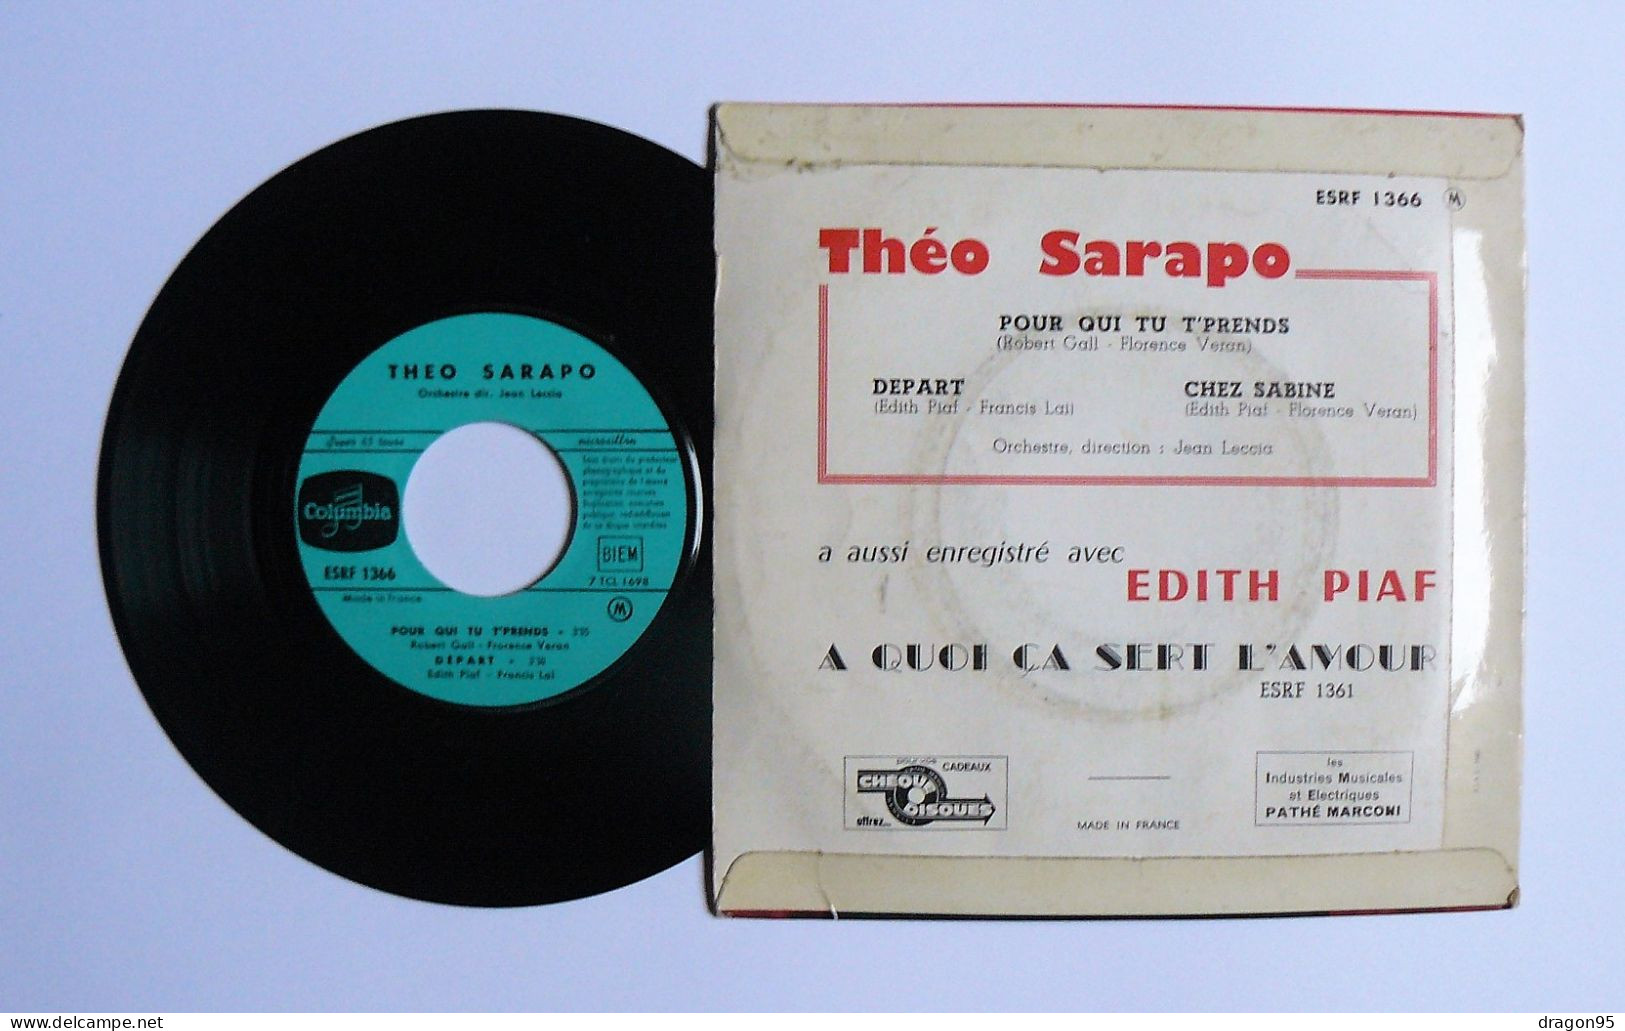 EP Theo SARAPO : Pour Qui Tu T'prends / Chez Sabine - Columbia ESRF 1366 - 1962 - Otros - Canción Francesa